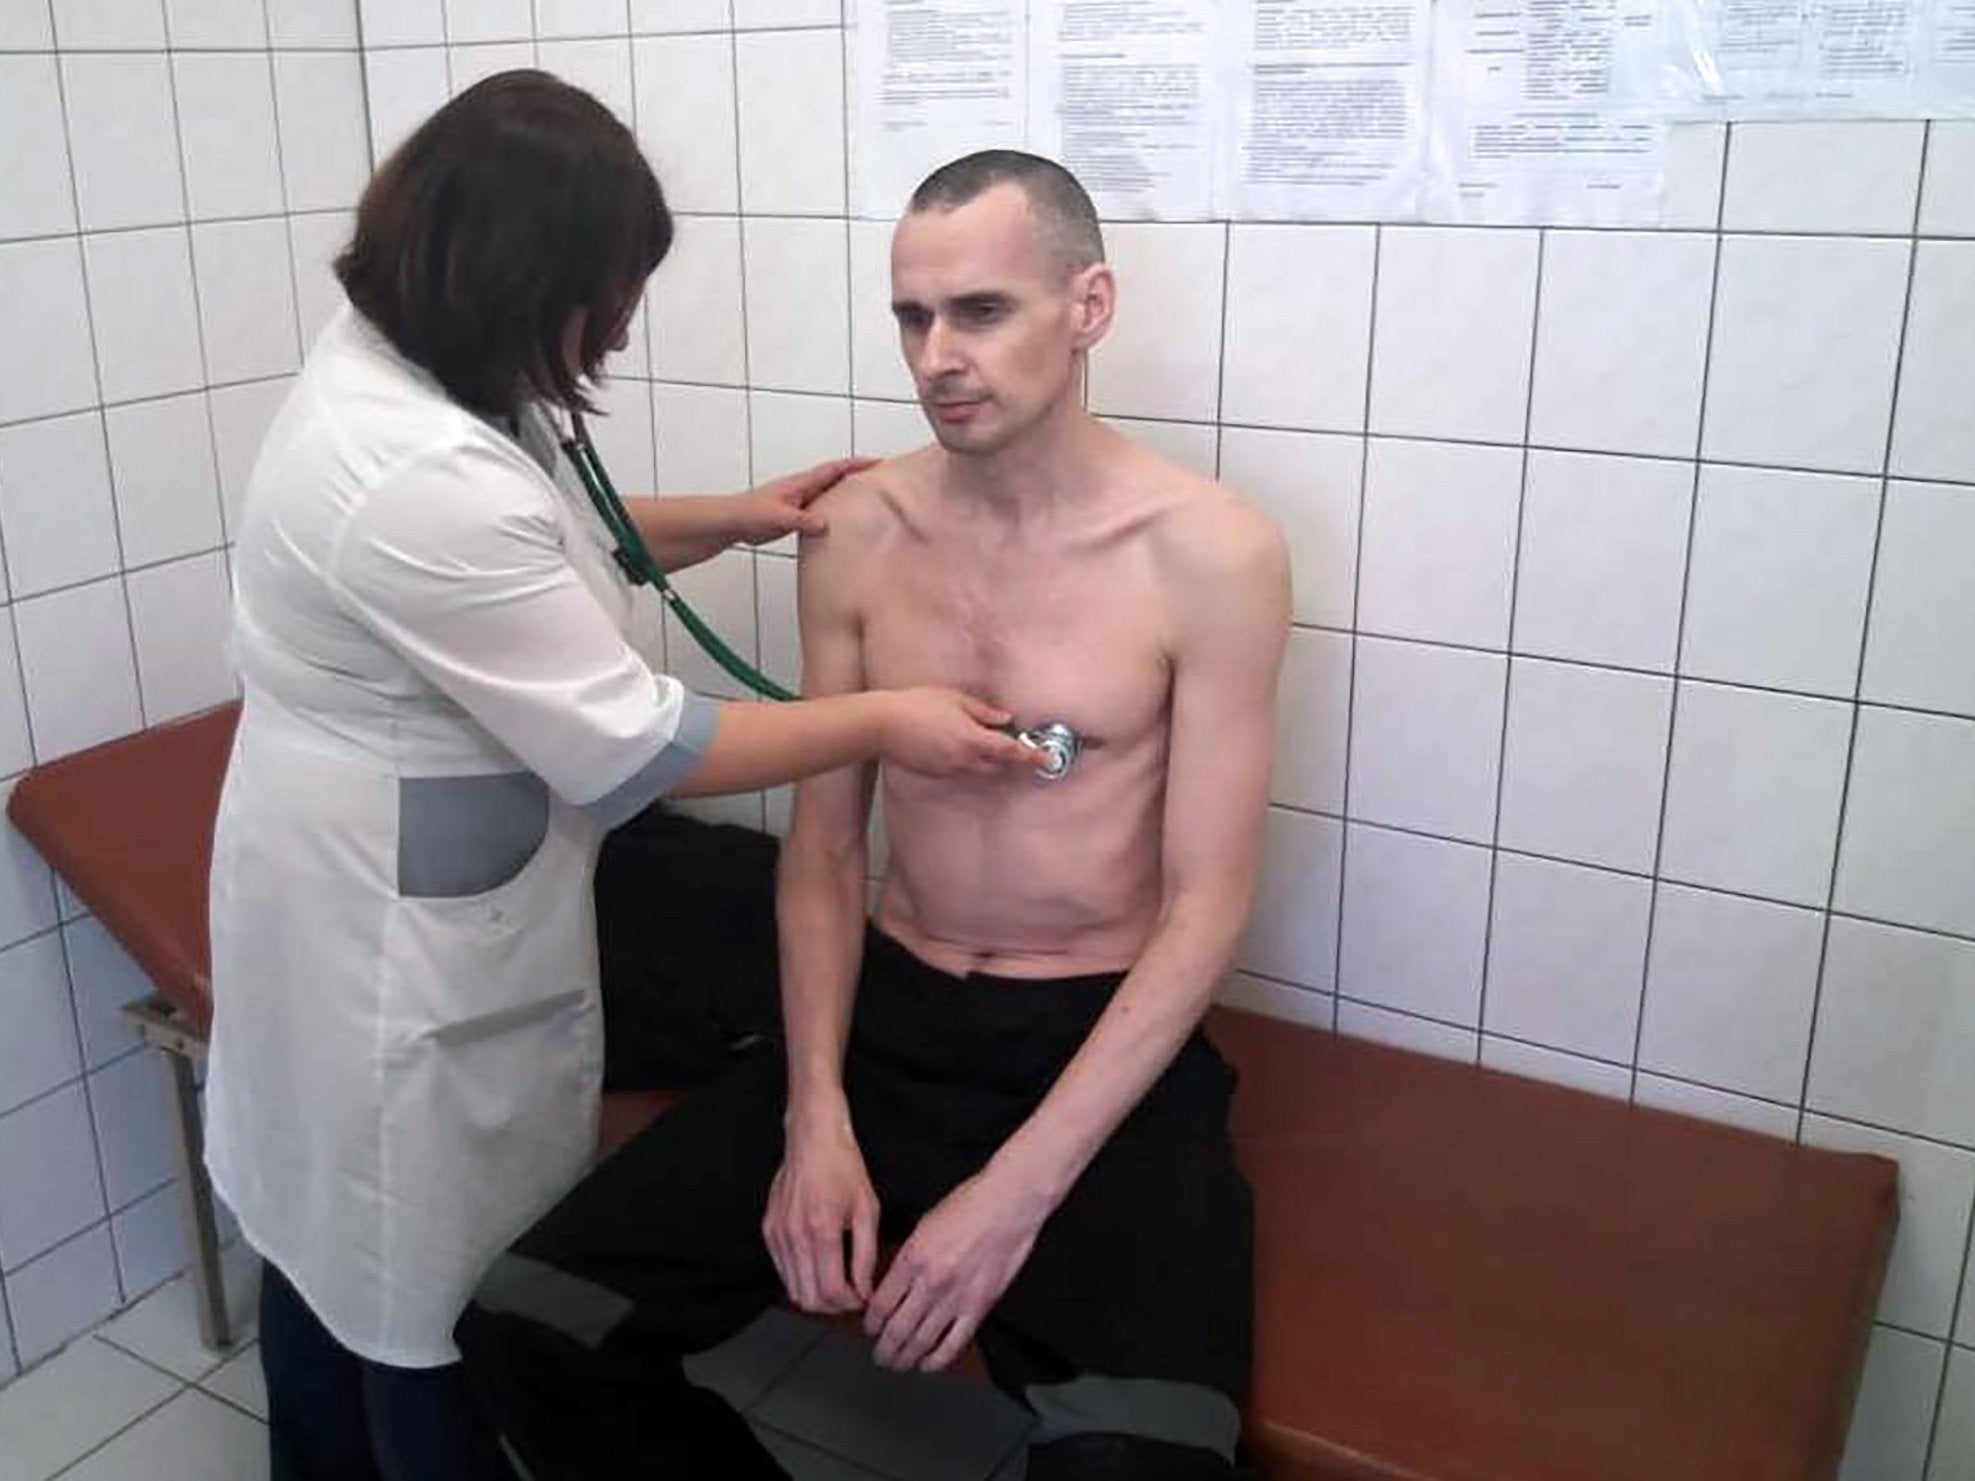 An emaciated Sentsov undergoes a medical examination at a state hospital in Labytnangi on 28 September